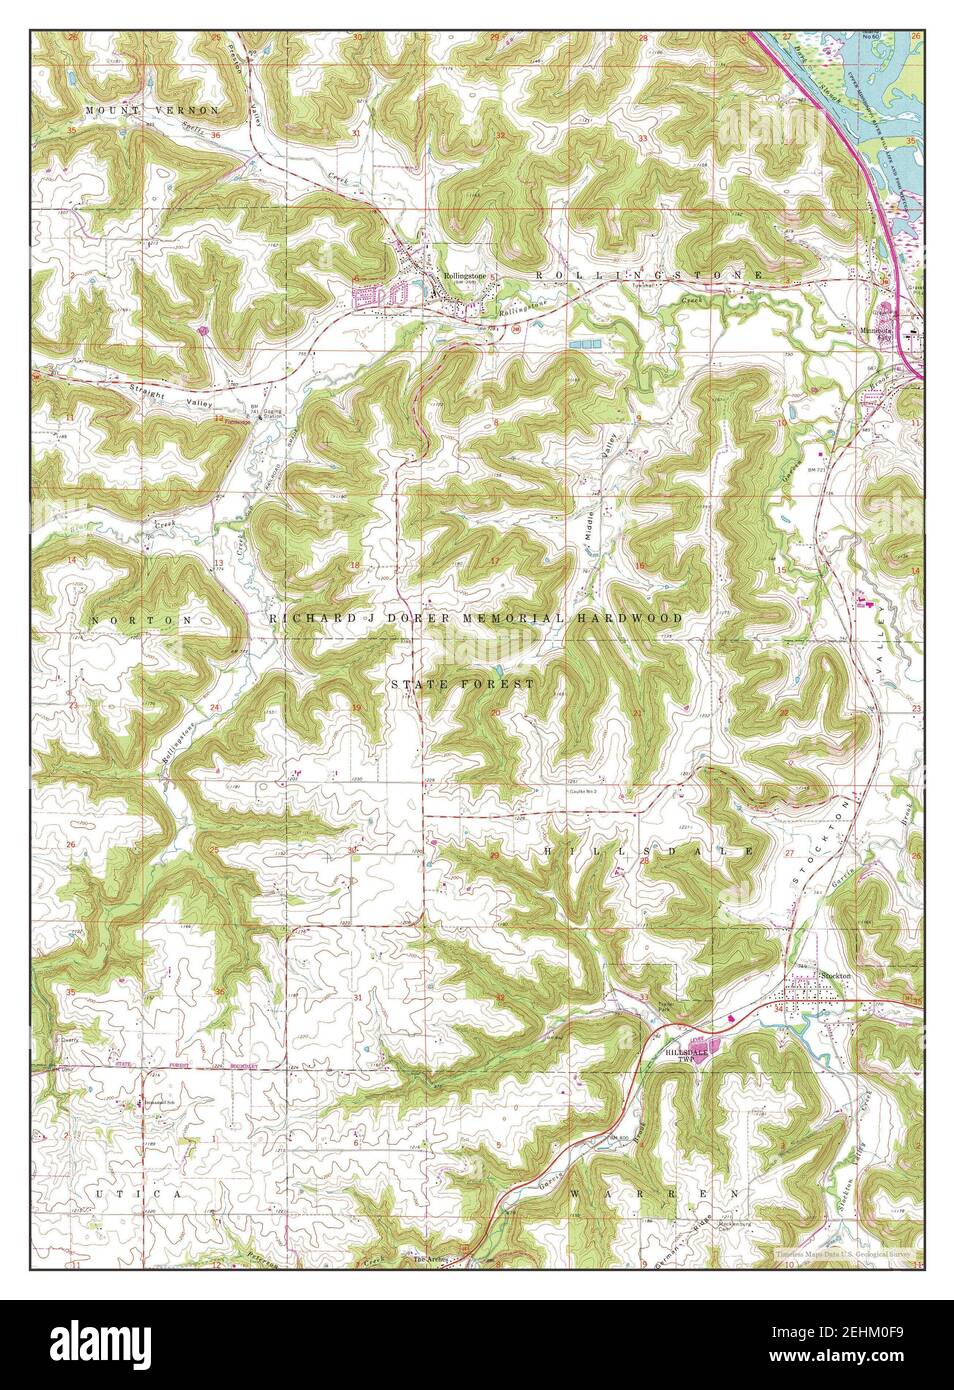 Rollingstone, Minnesota, map 1972, 1:24000, United States of America by Timeless Maps, data U.S. Geological Survey Stock Photo